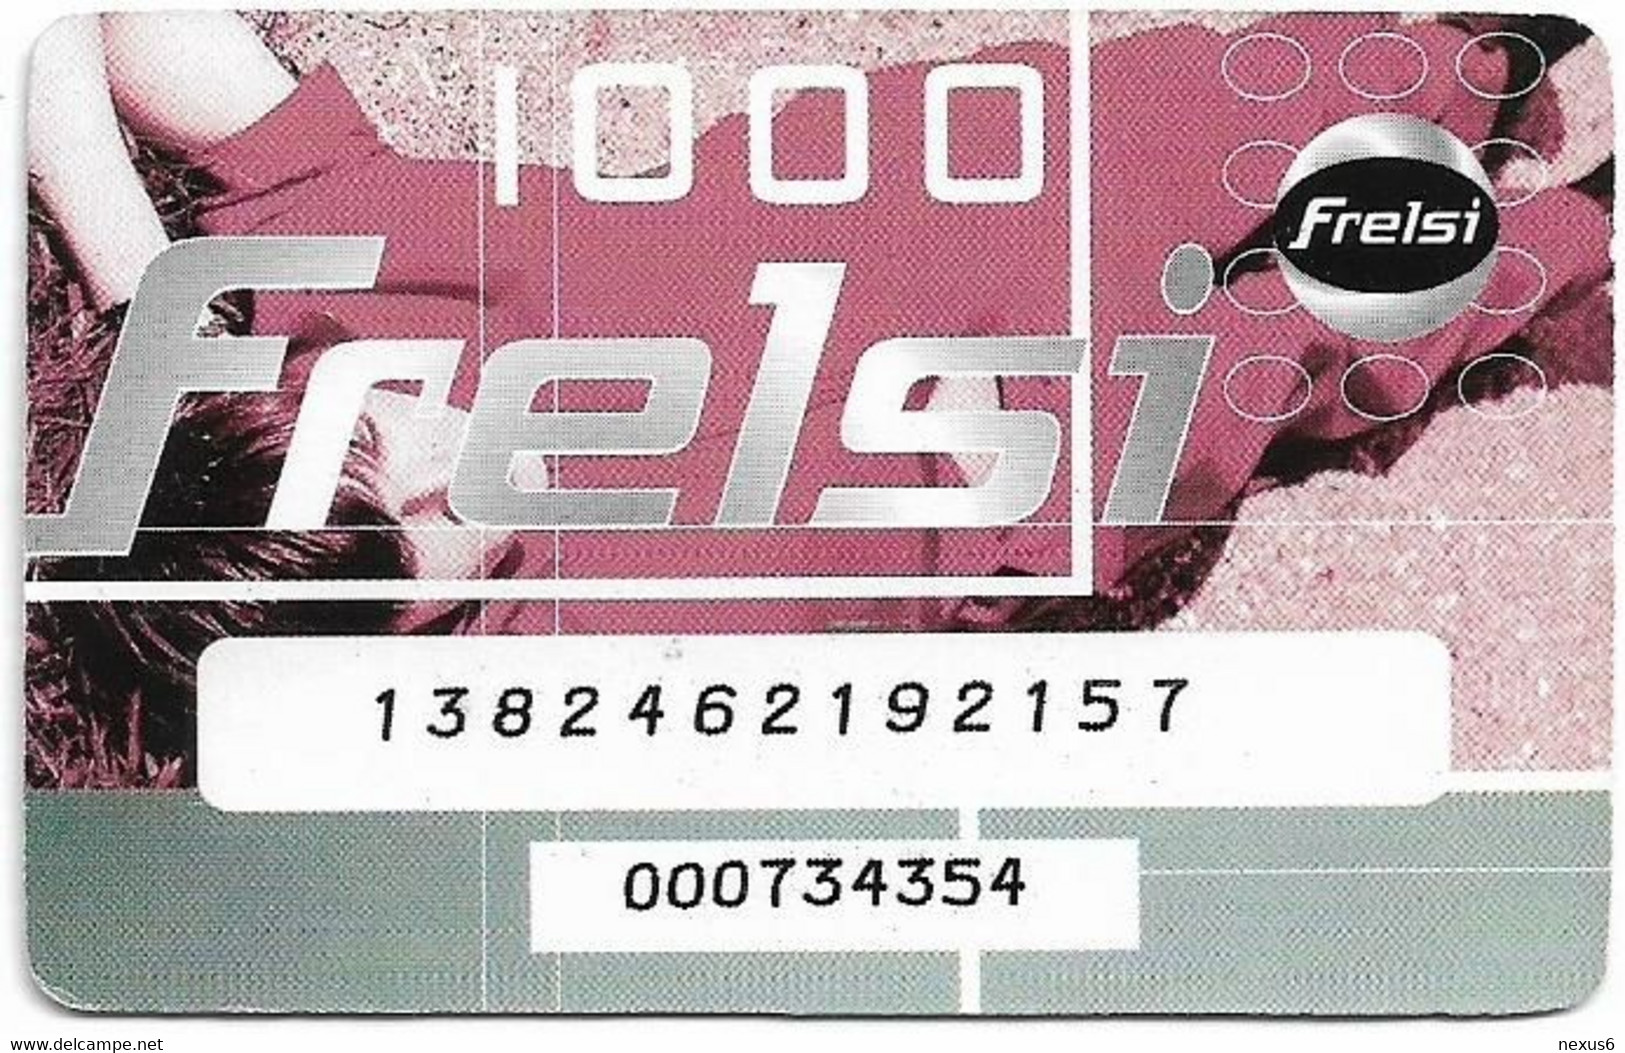 Iceland - Siminn - Frelsi, Lying Man, (Pink), PIN No. Type #2, GSM Refill 1.000Kr, Used - Island